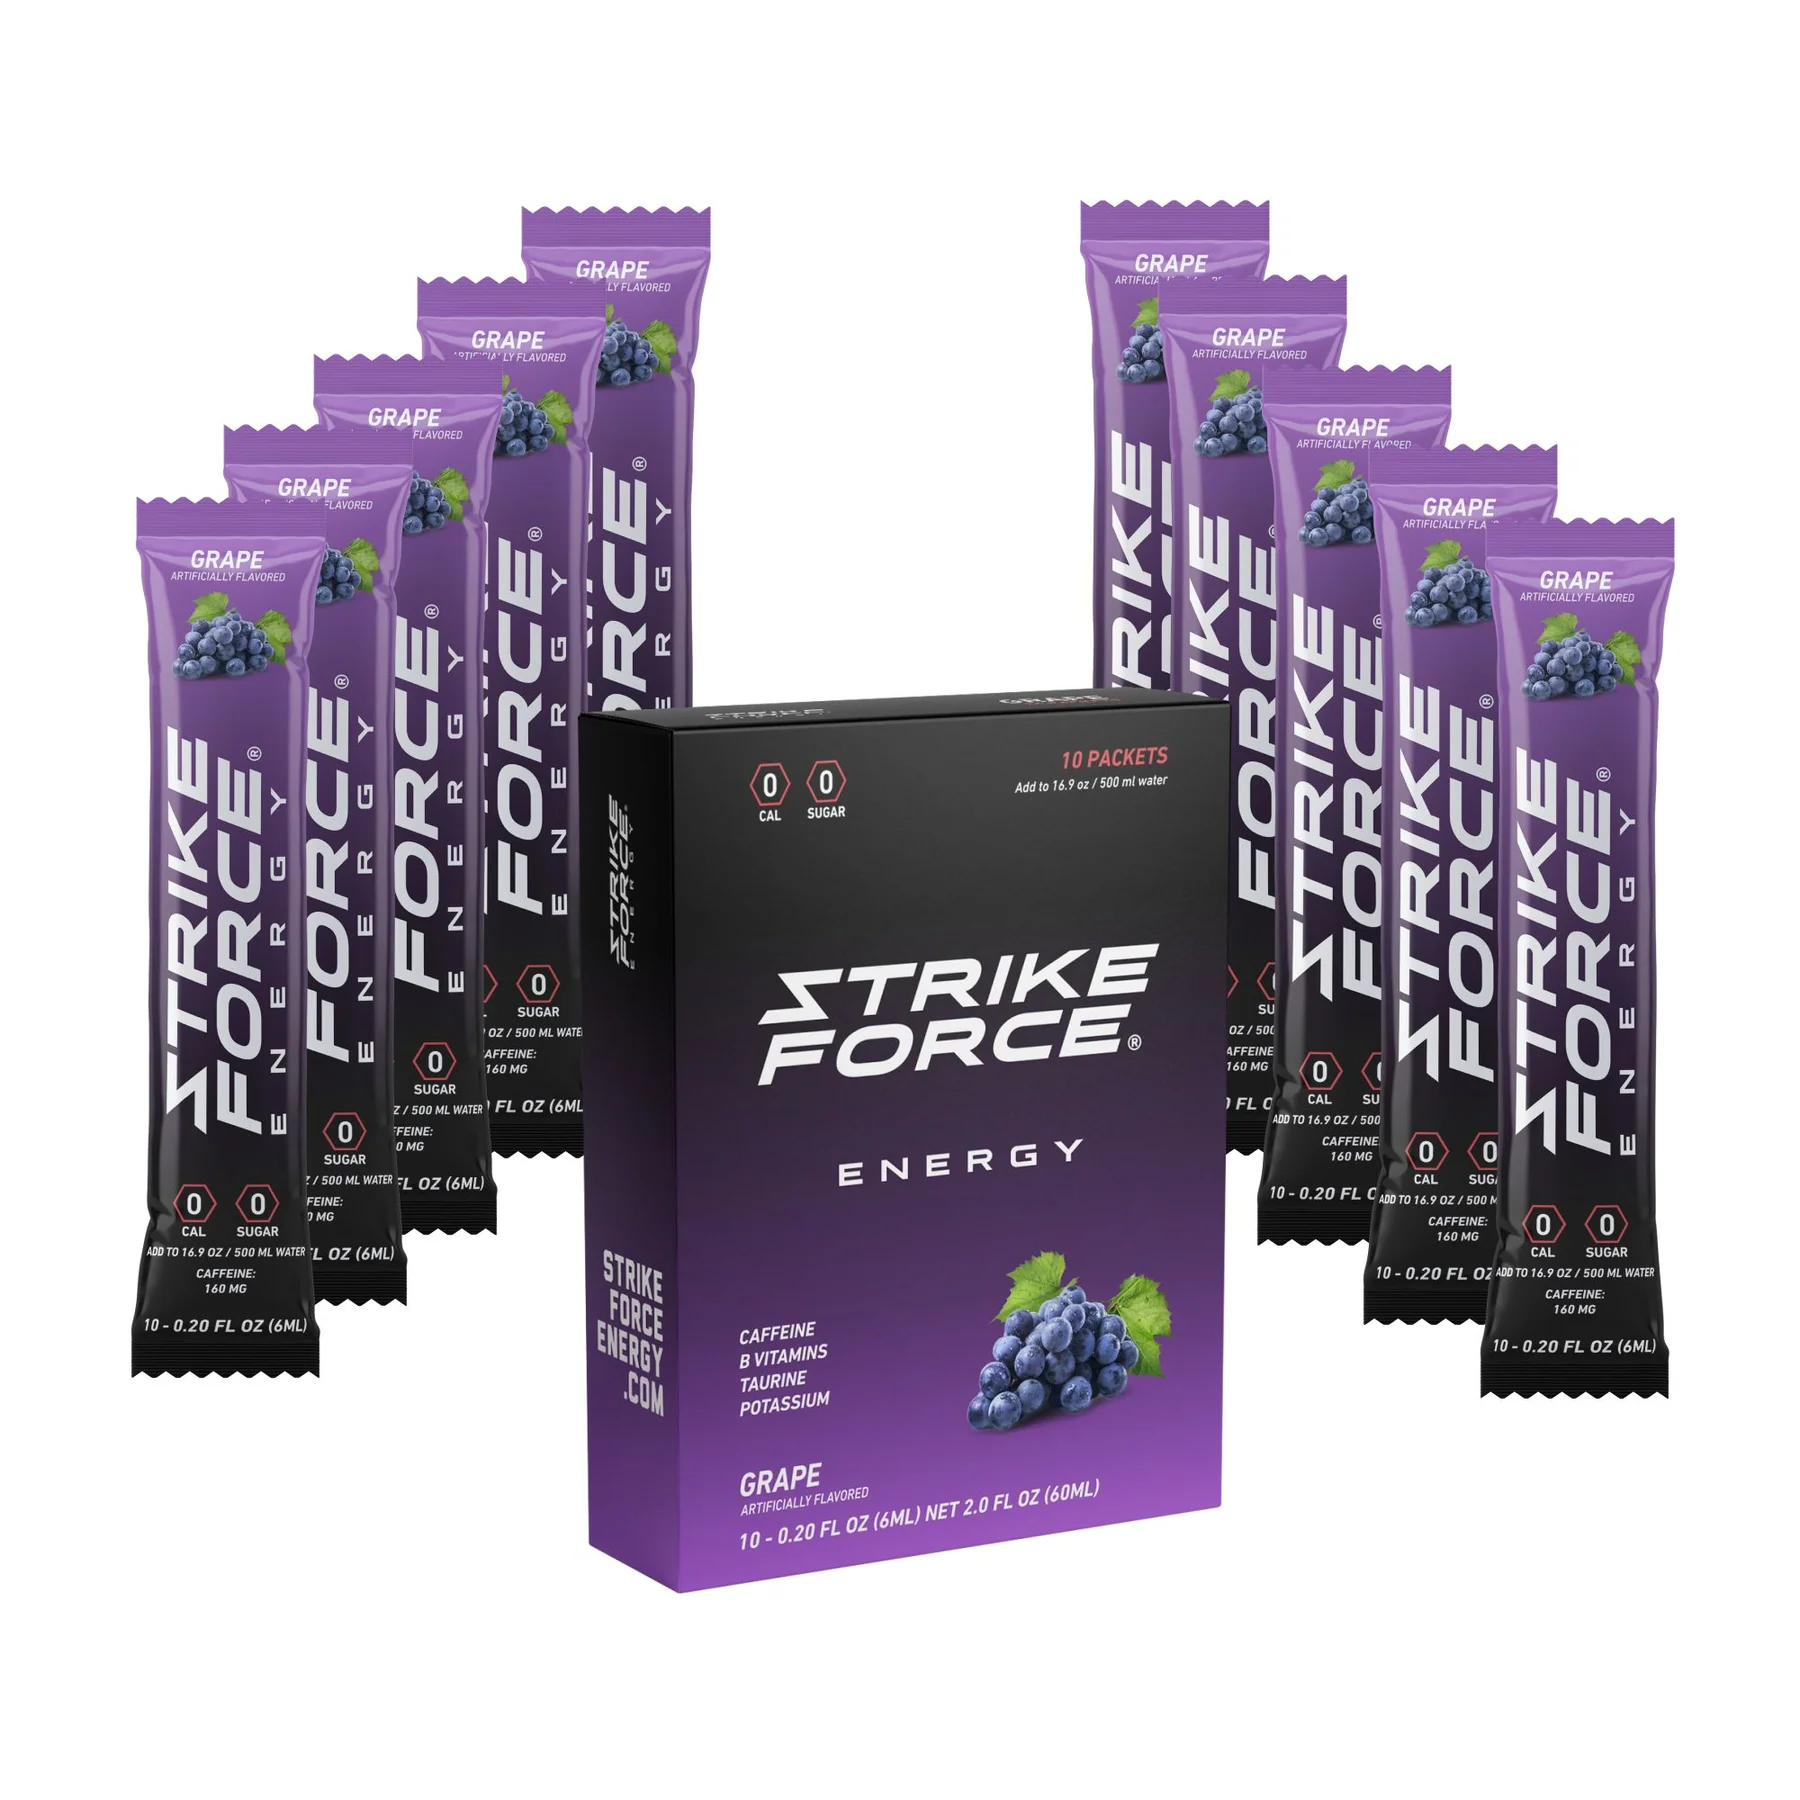 Strike Force Energy 10 pack Grape